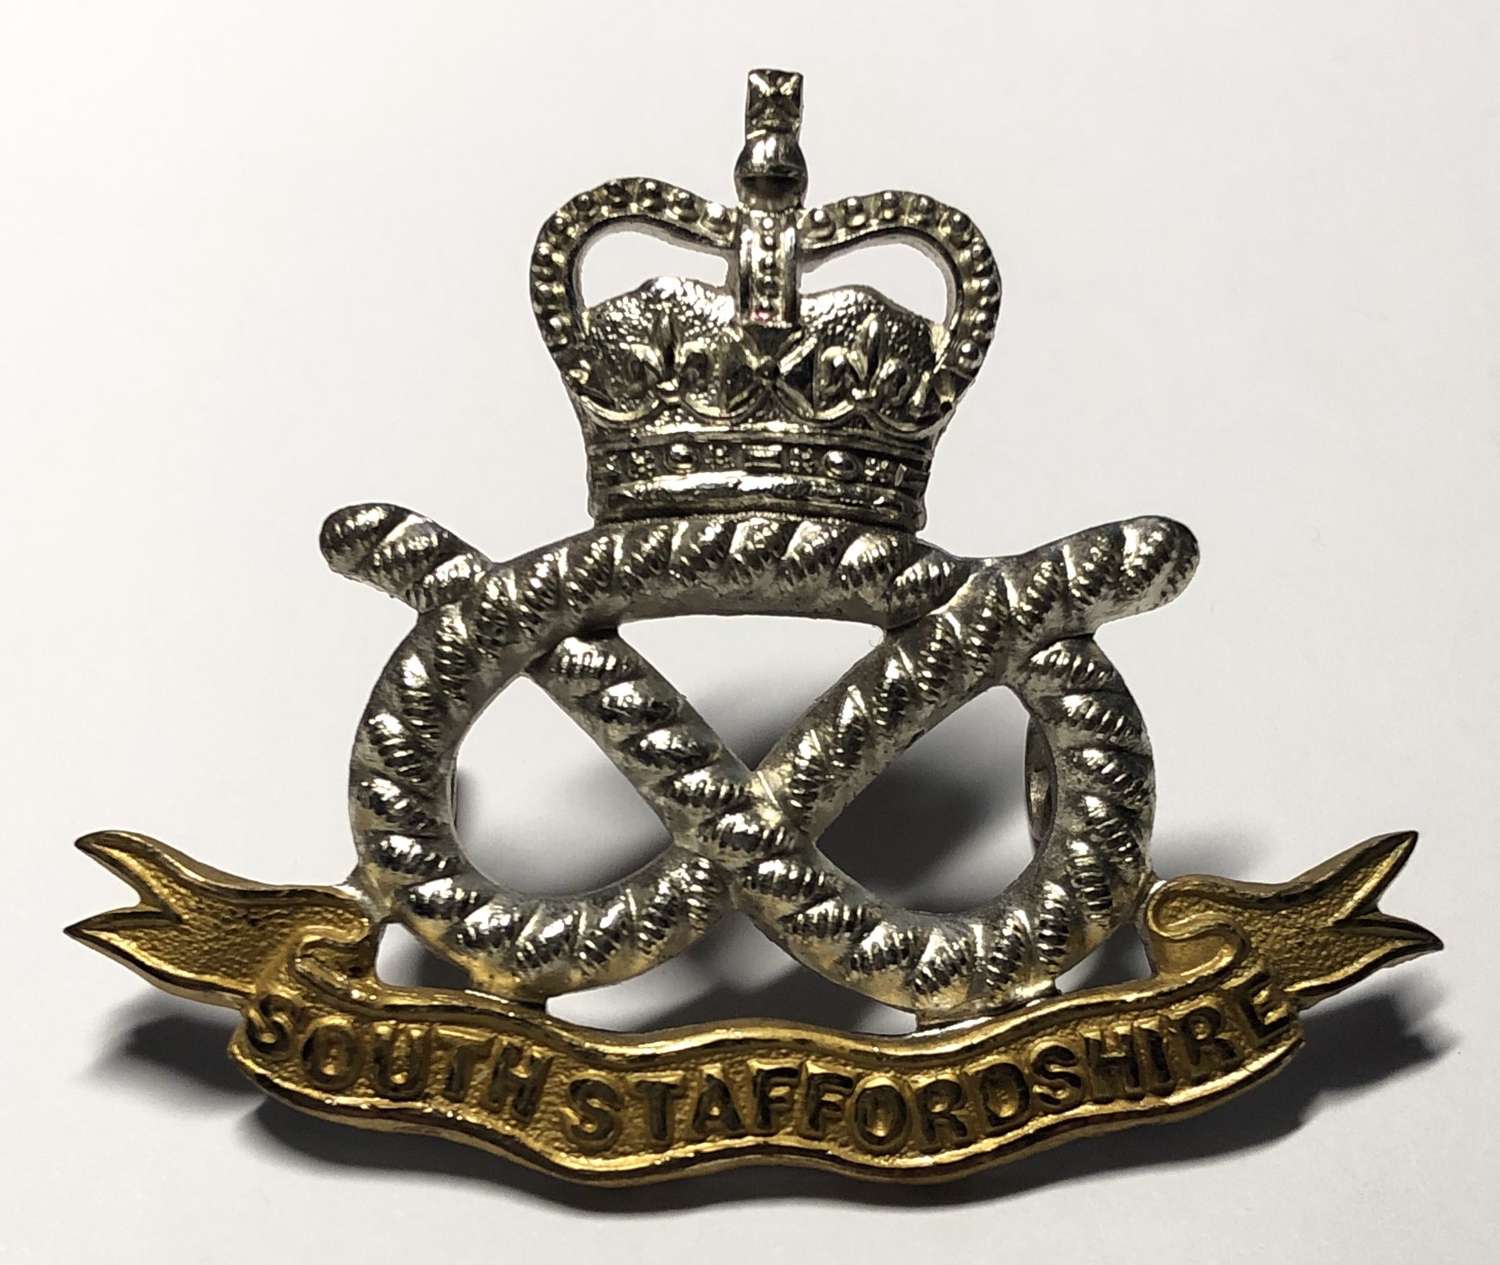 South Staffordshire Regiment Officer’s cap badge circa 1953-59